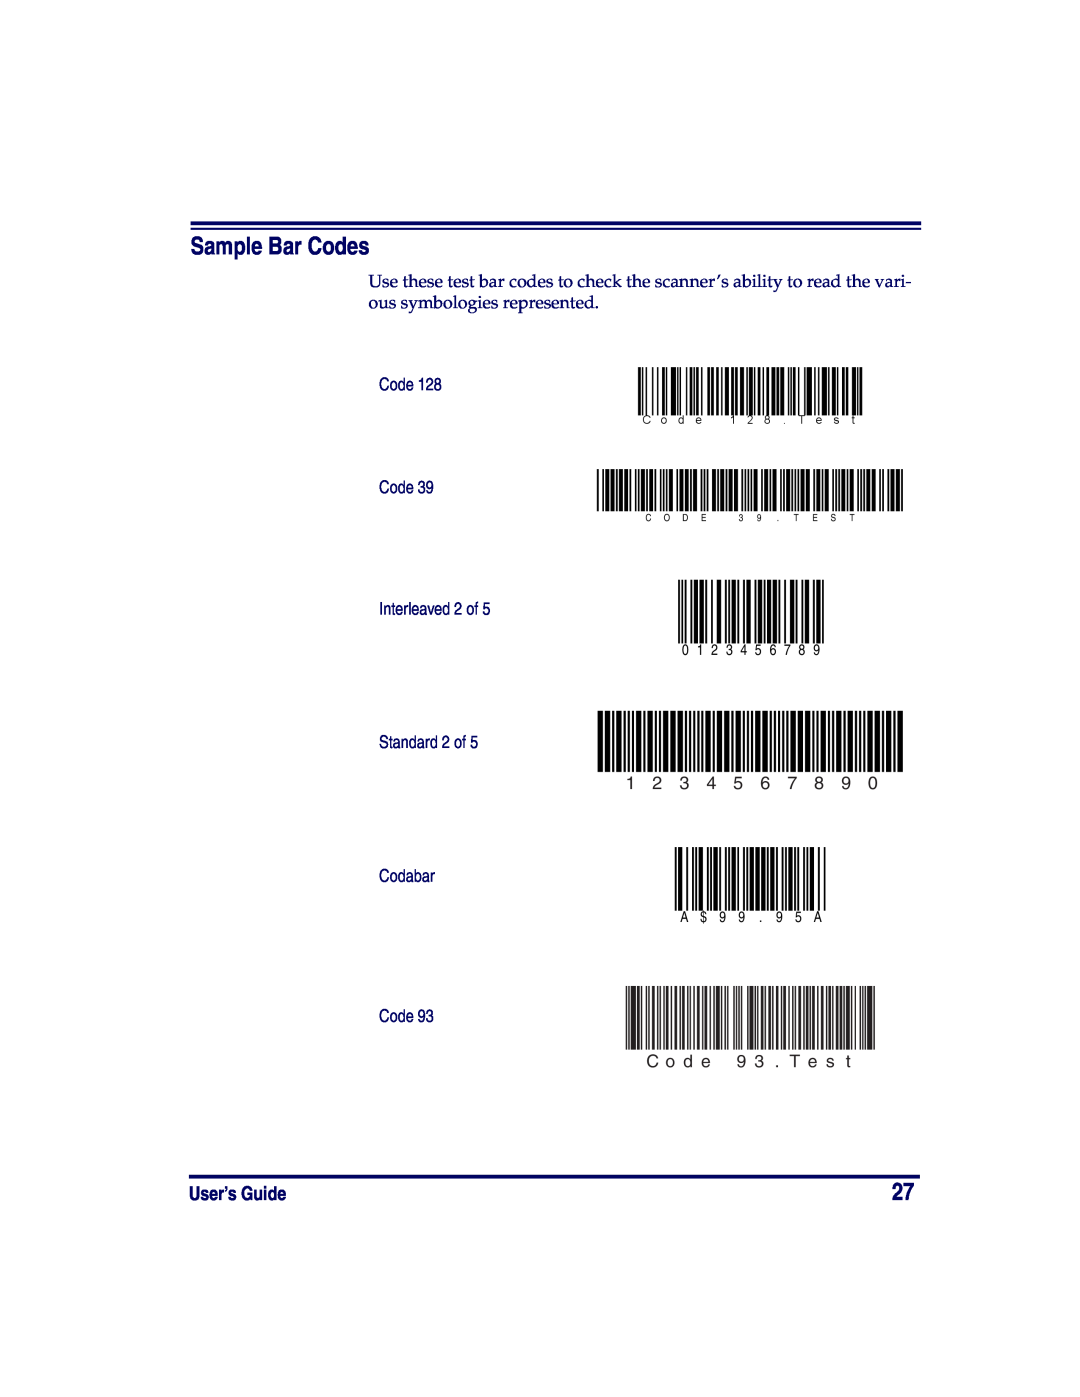 Datalogic Scanning HD, SR, XLR manual Sample Bar Codes, C o d e 9 3 . T e s t, User’s Guide, 0 1 2 3 4 5 6, A $ 9 9 . 9 5 A 